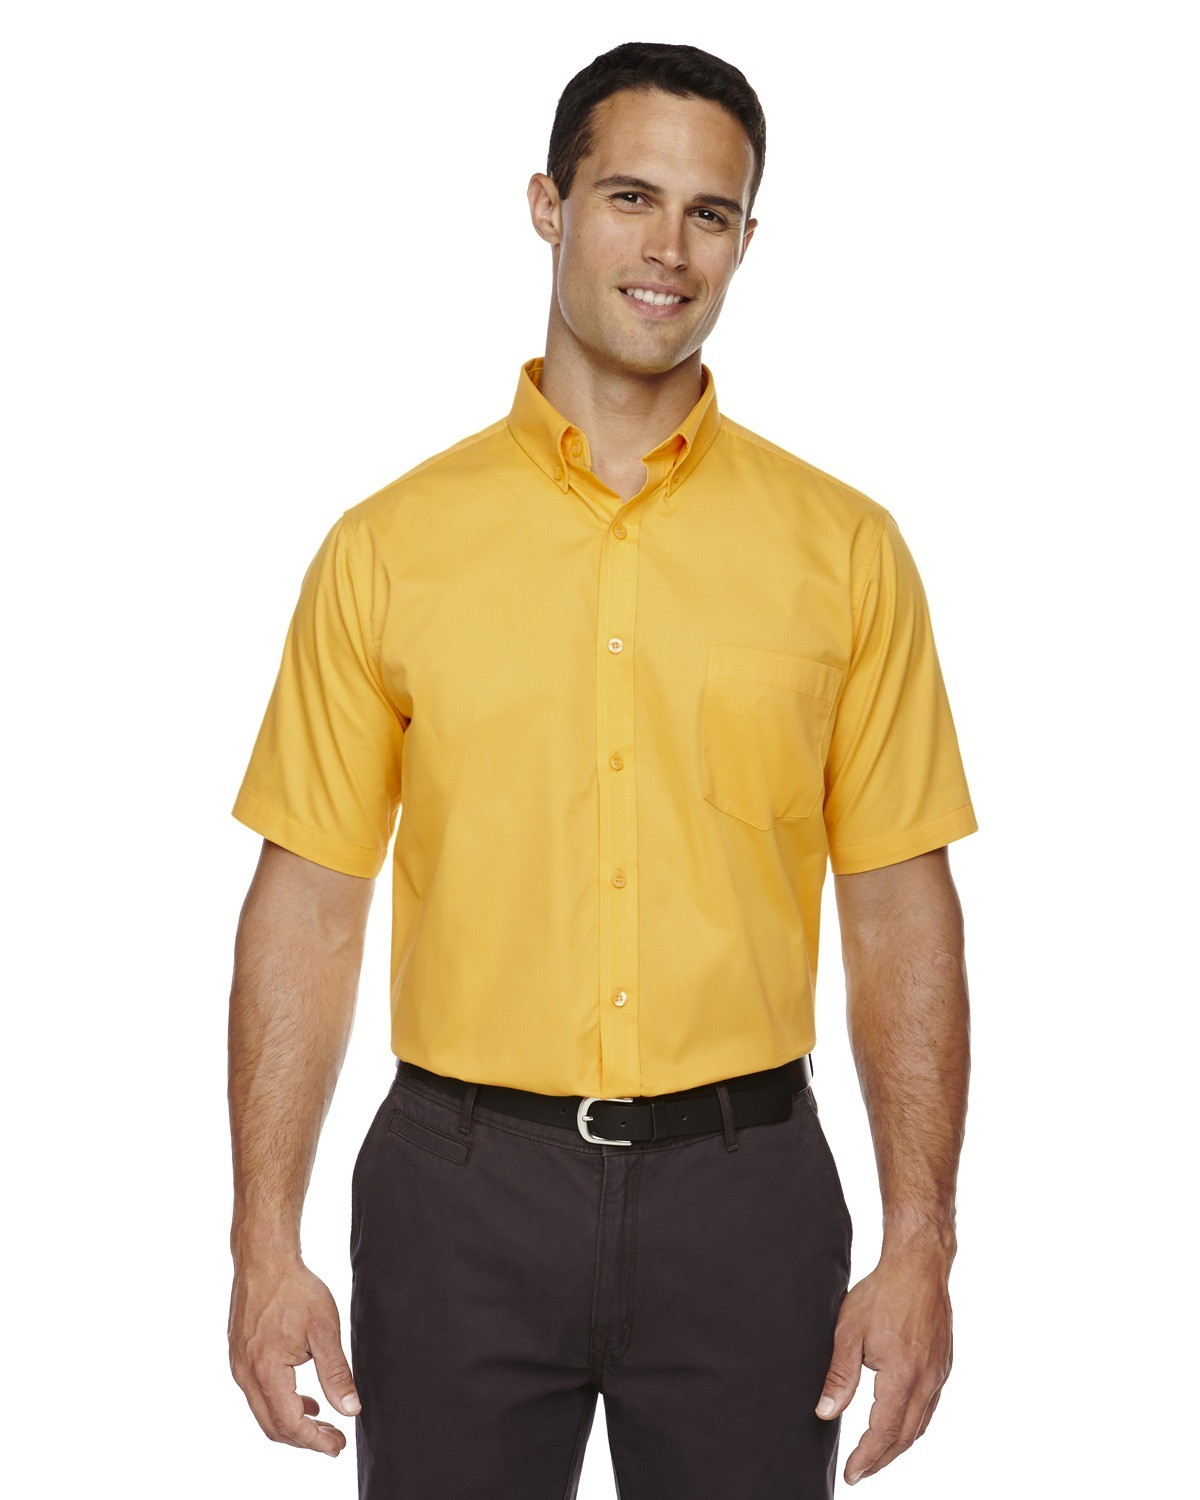 Core 365 88194 Men's Optimum Short-Sleeve Twill Shirt - image 1 of 2